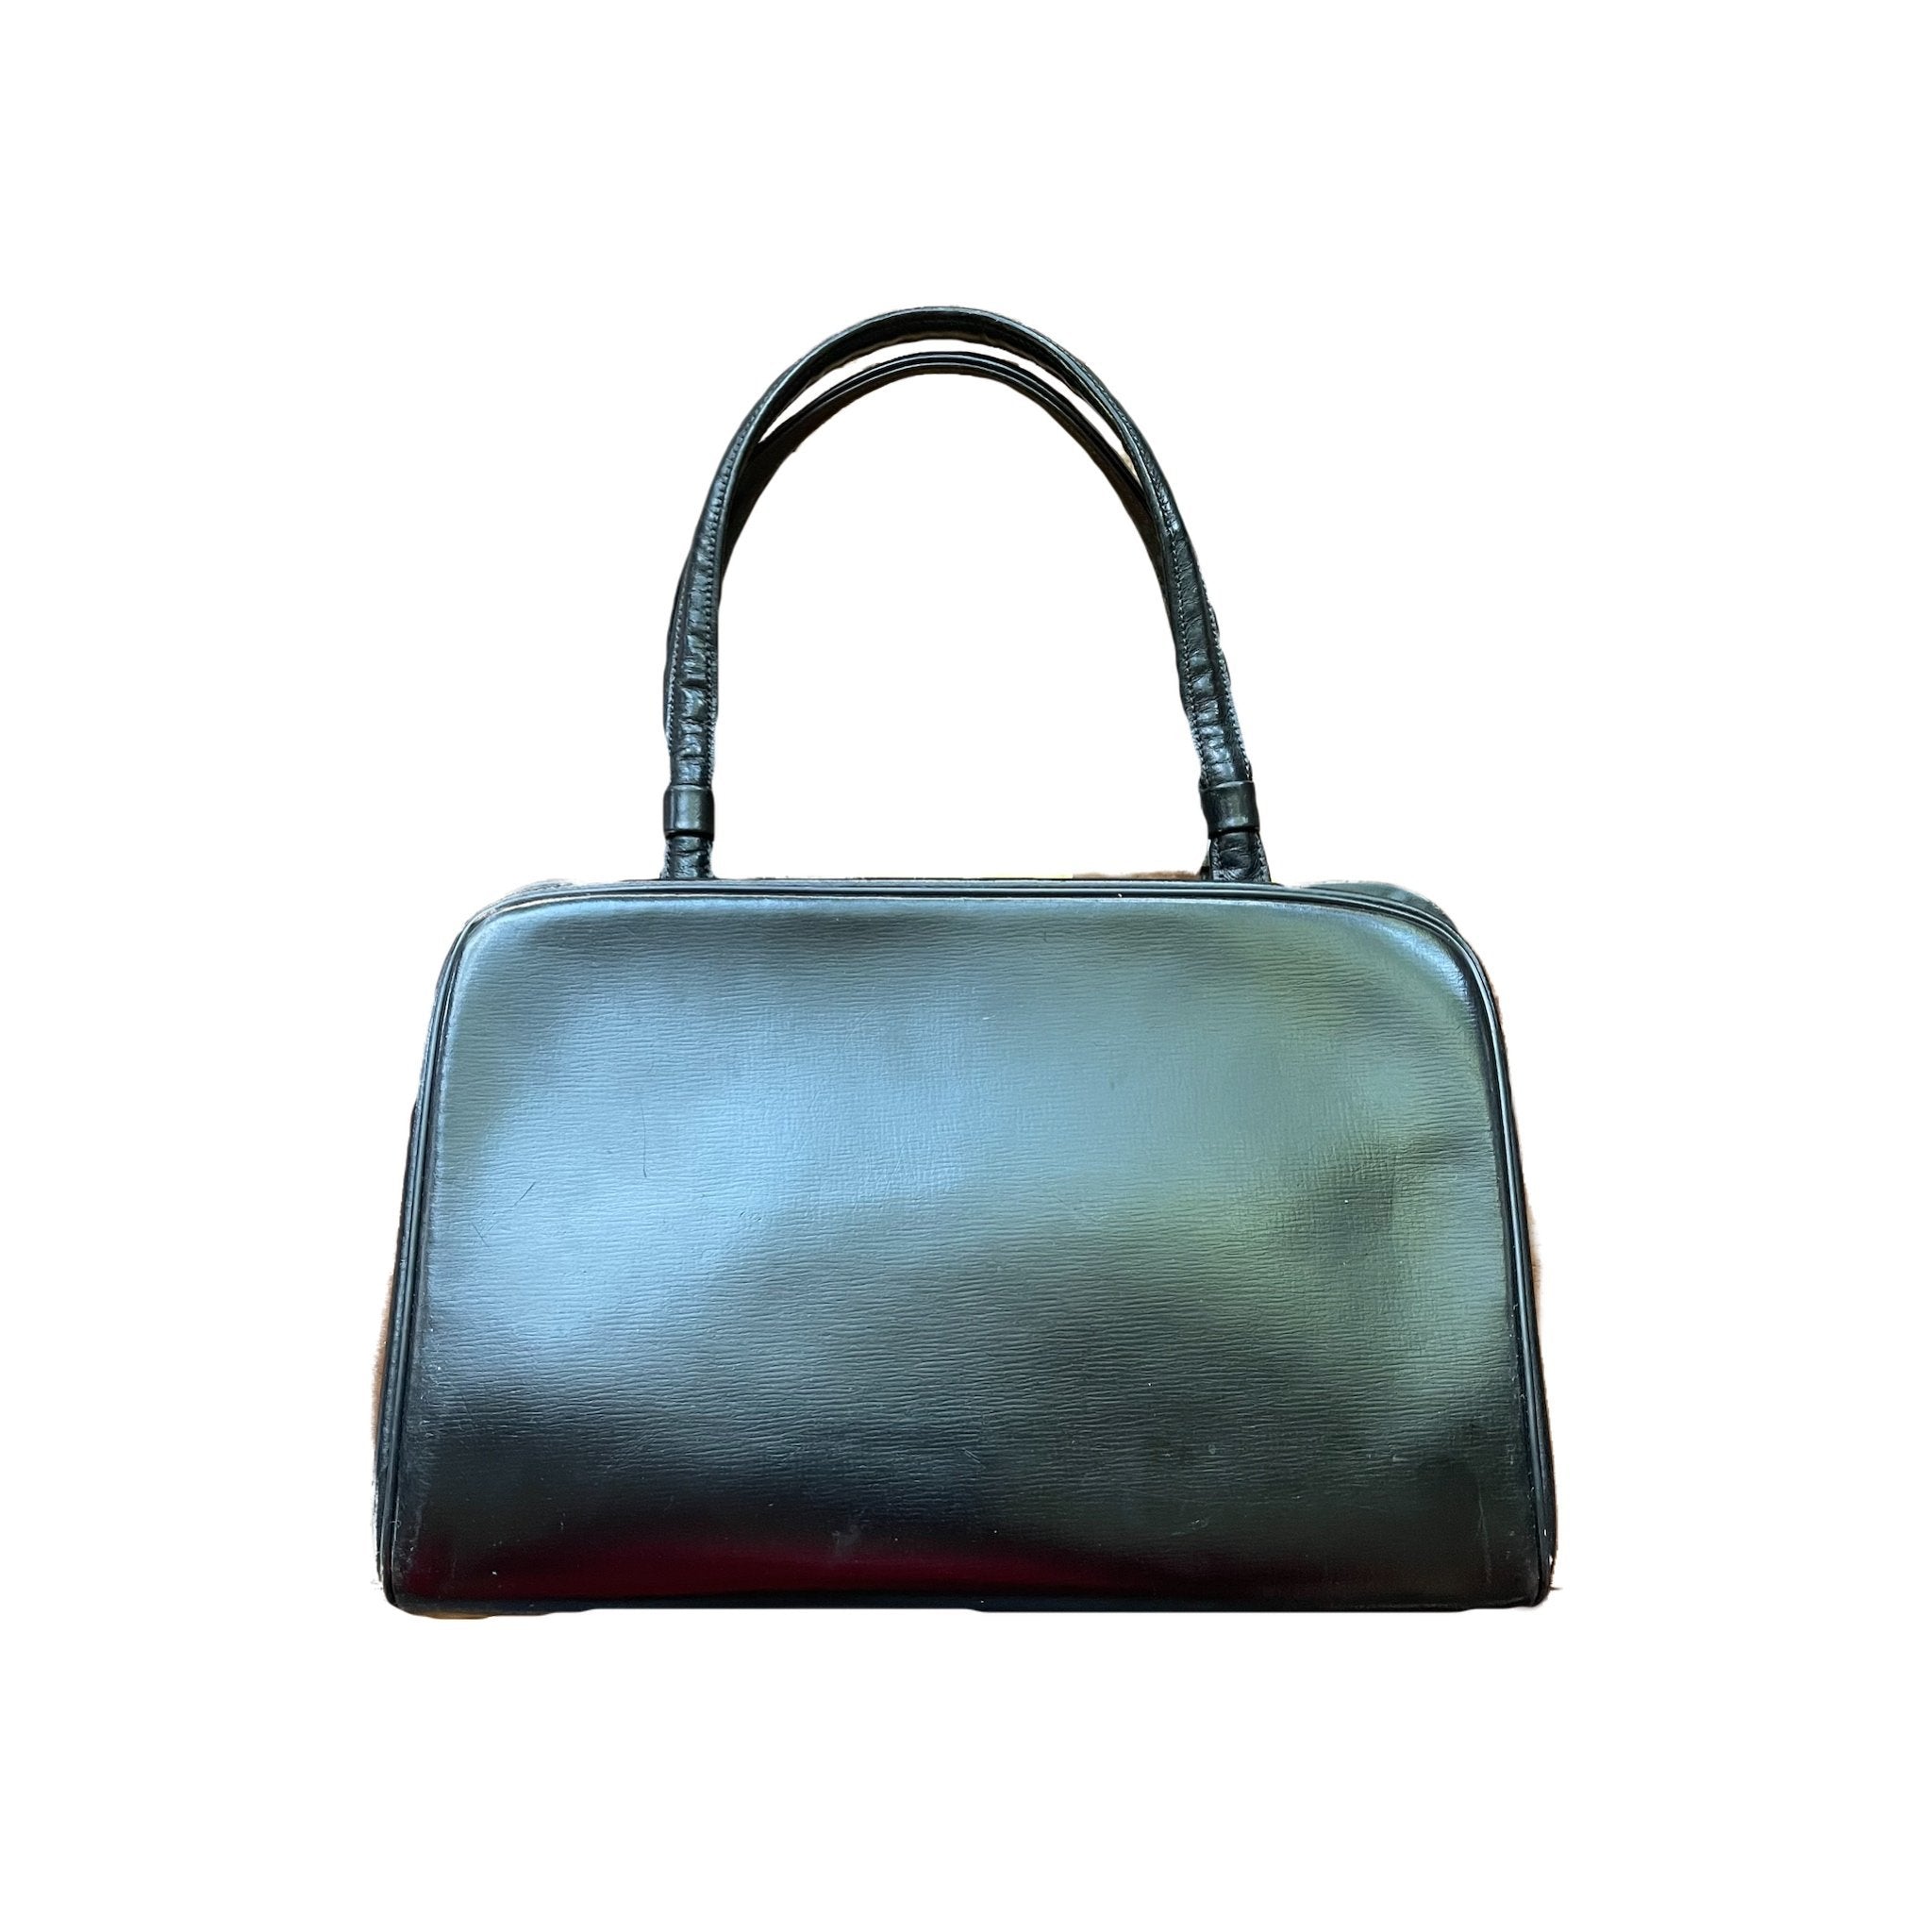 1950s Patent Leather Frame Handbag | Rock Follies Vintage